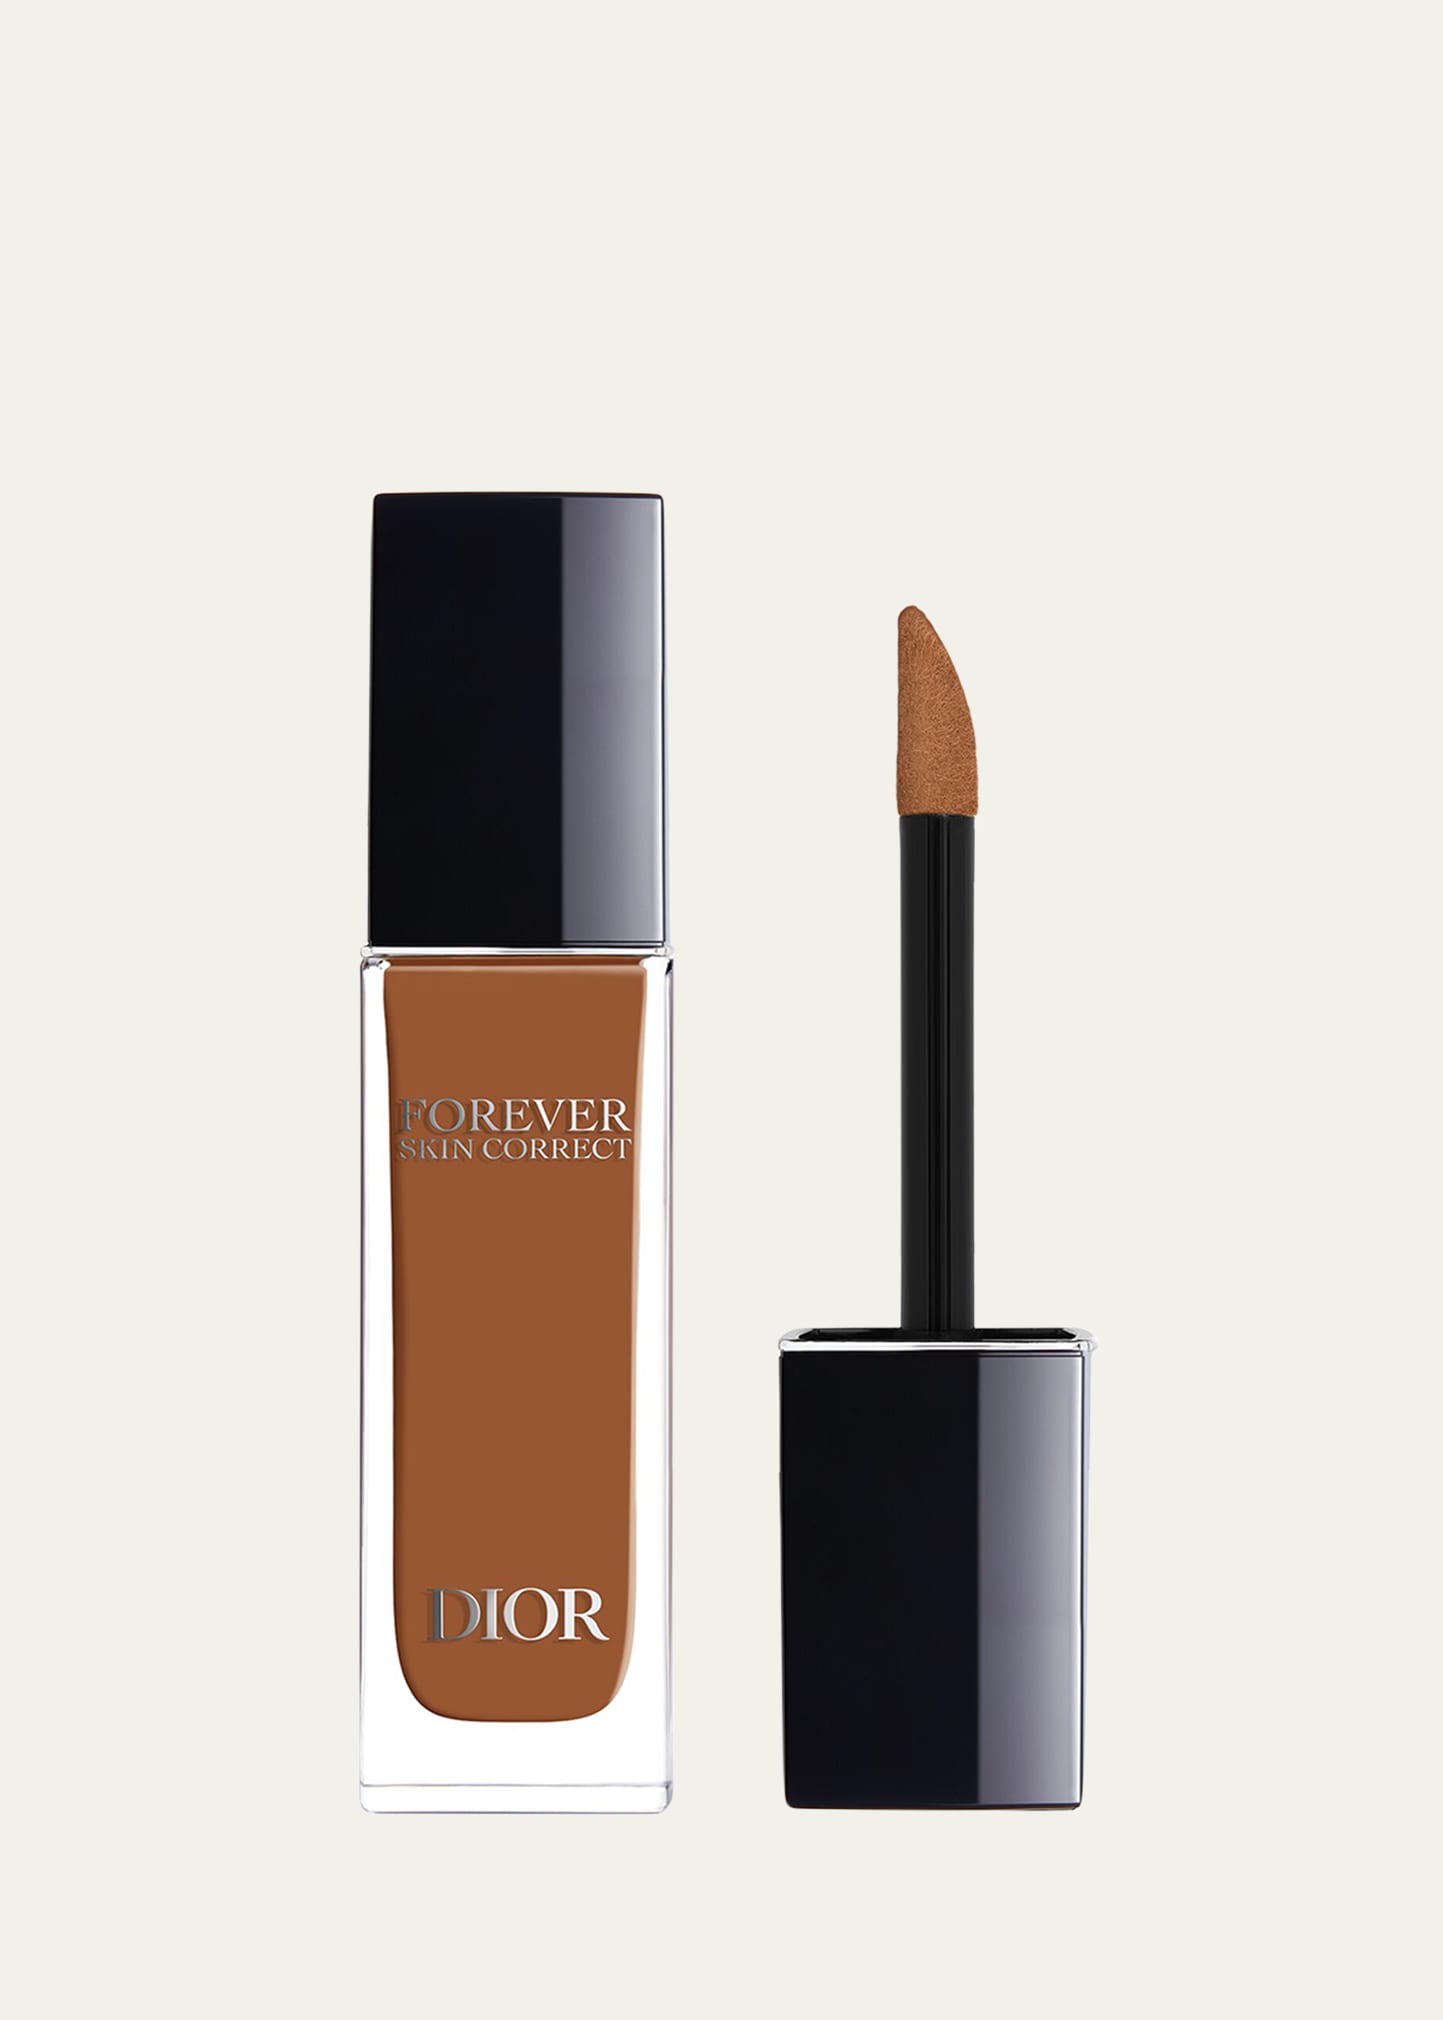 Dior Forever Skin Correct Full-coverage Concealer In 8 N Neutral